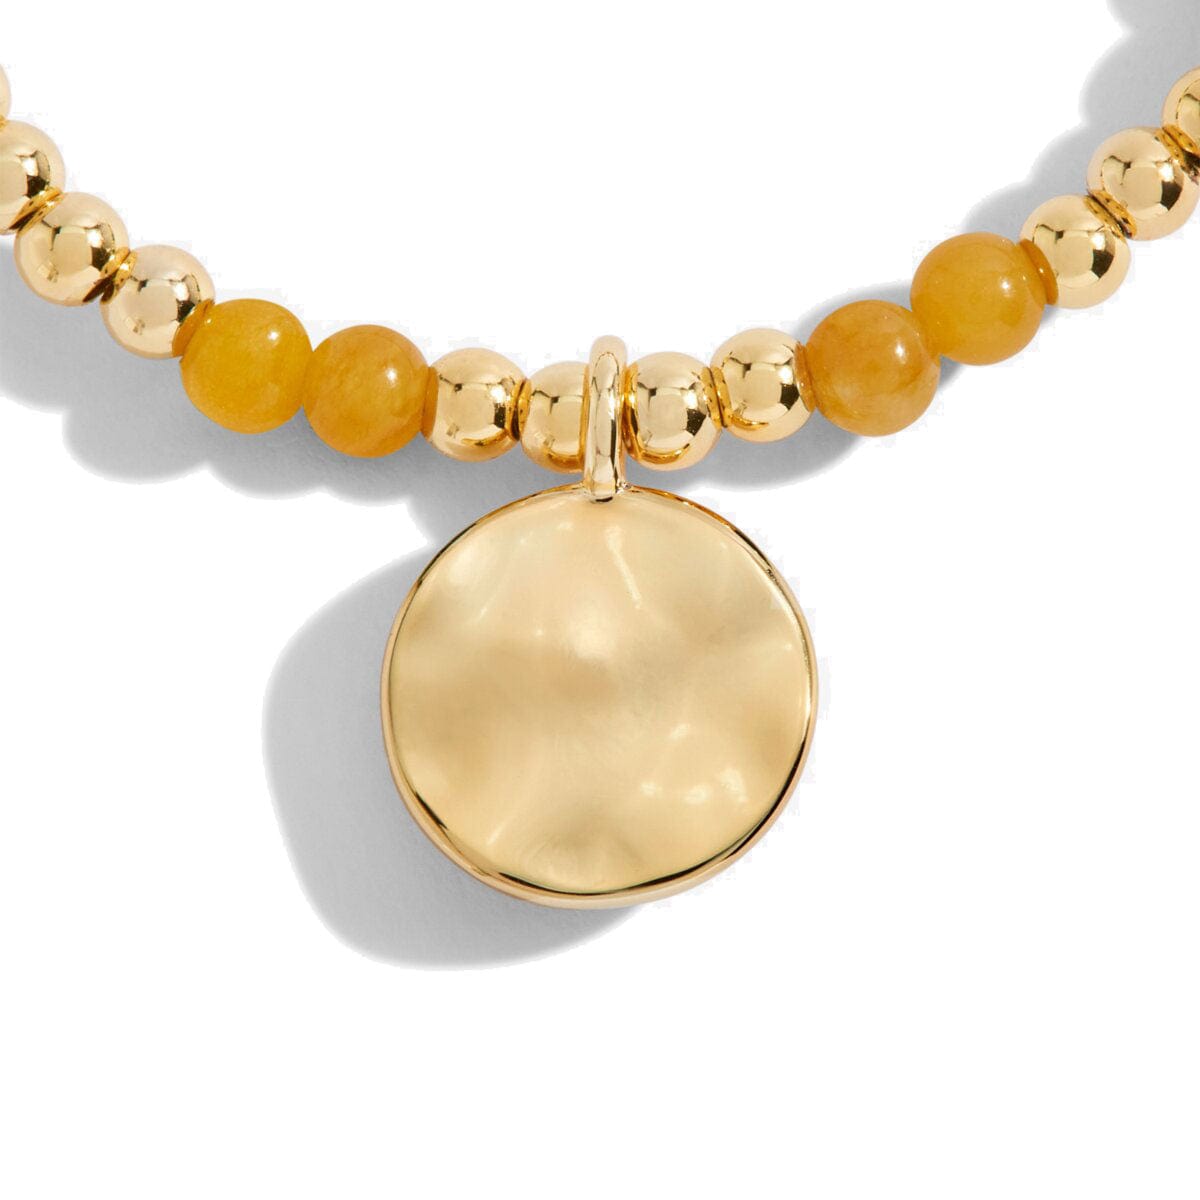 Joma Jewellery Bracelet Joma Jewellery Bracelet - A Little Gold Birthstone - November - Yellow Quartz